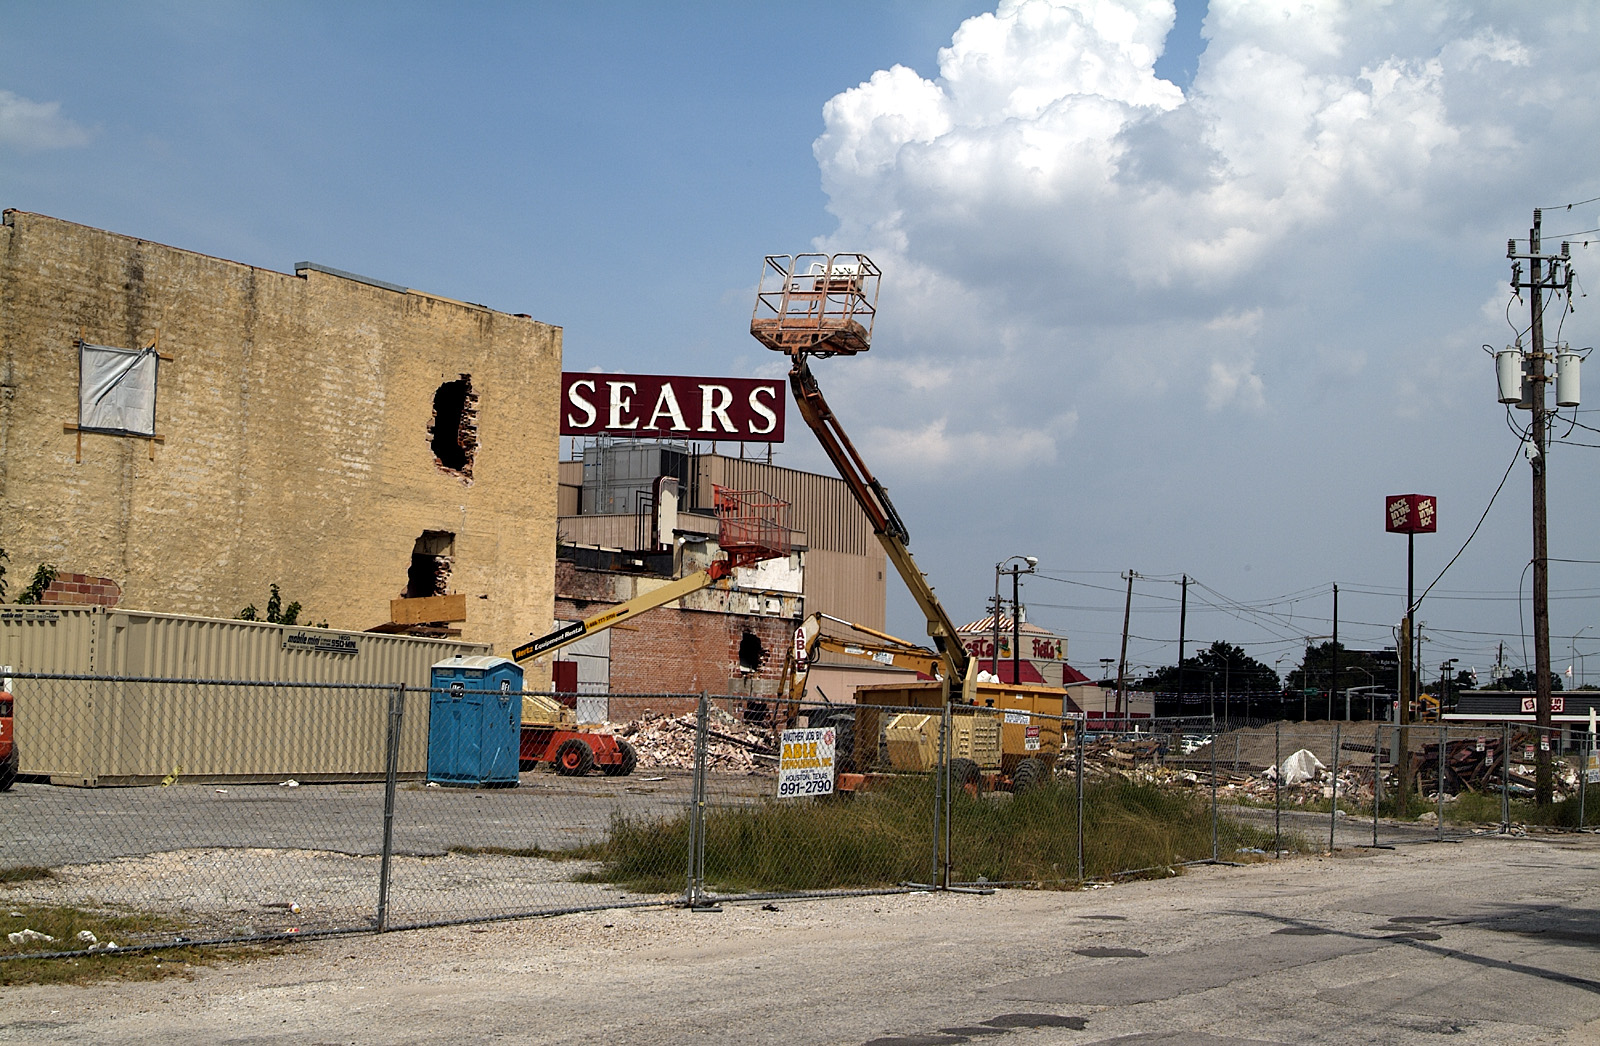 Sears on Main Street